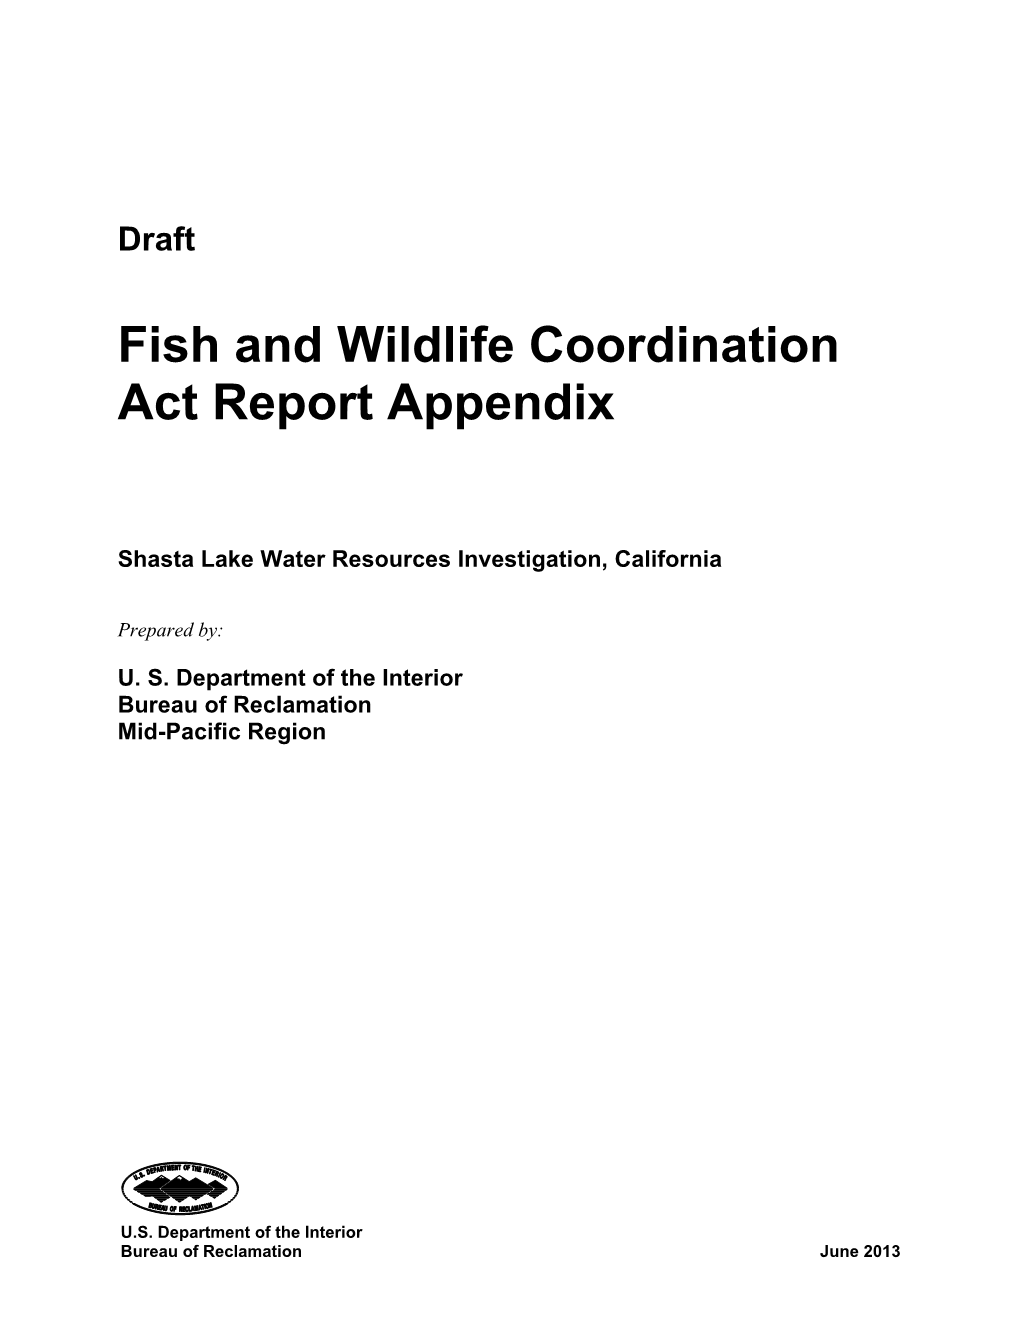 Fish and Wildlife Coordination Act Report Appendix